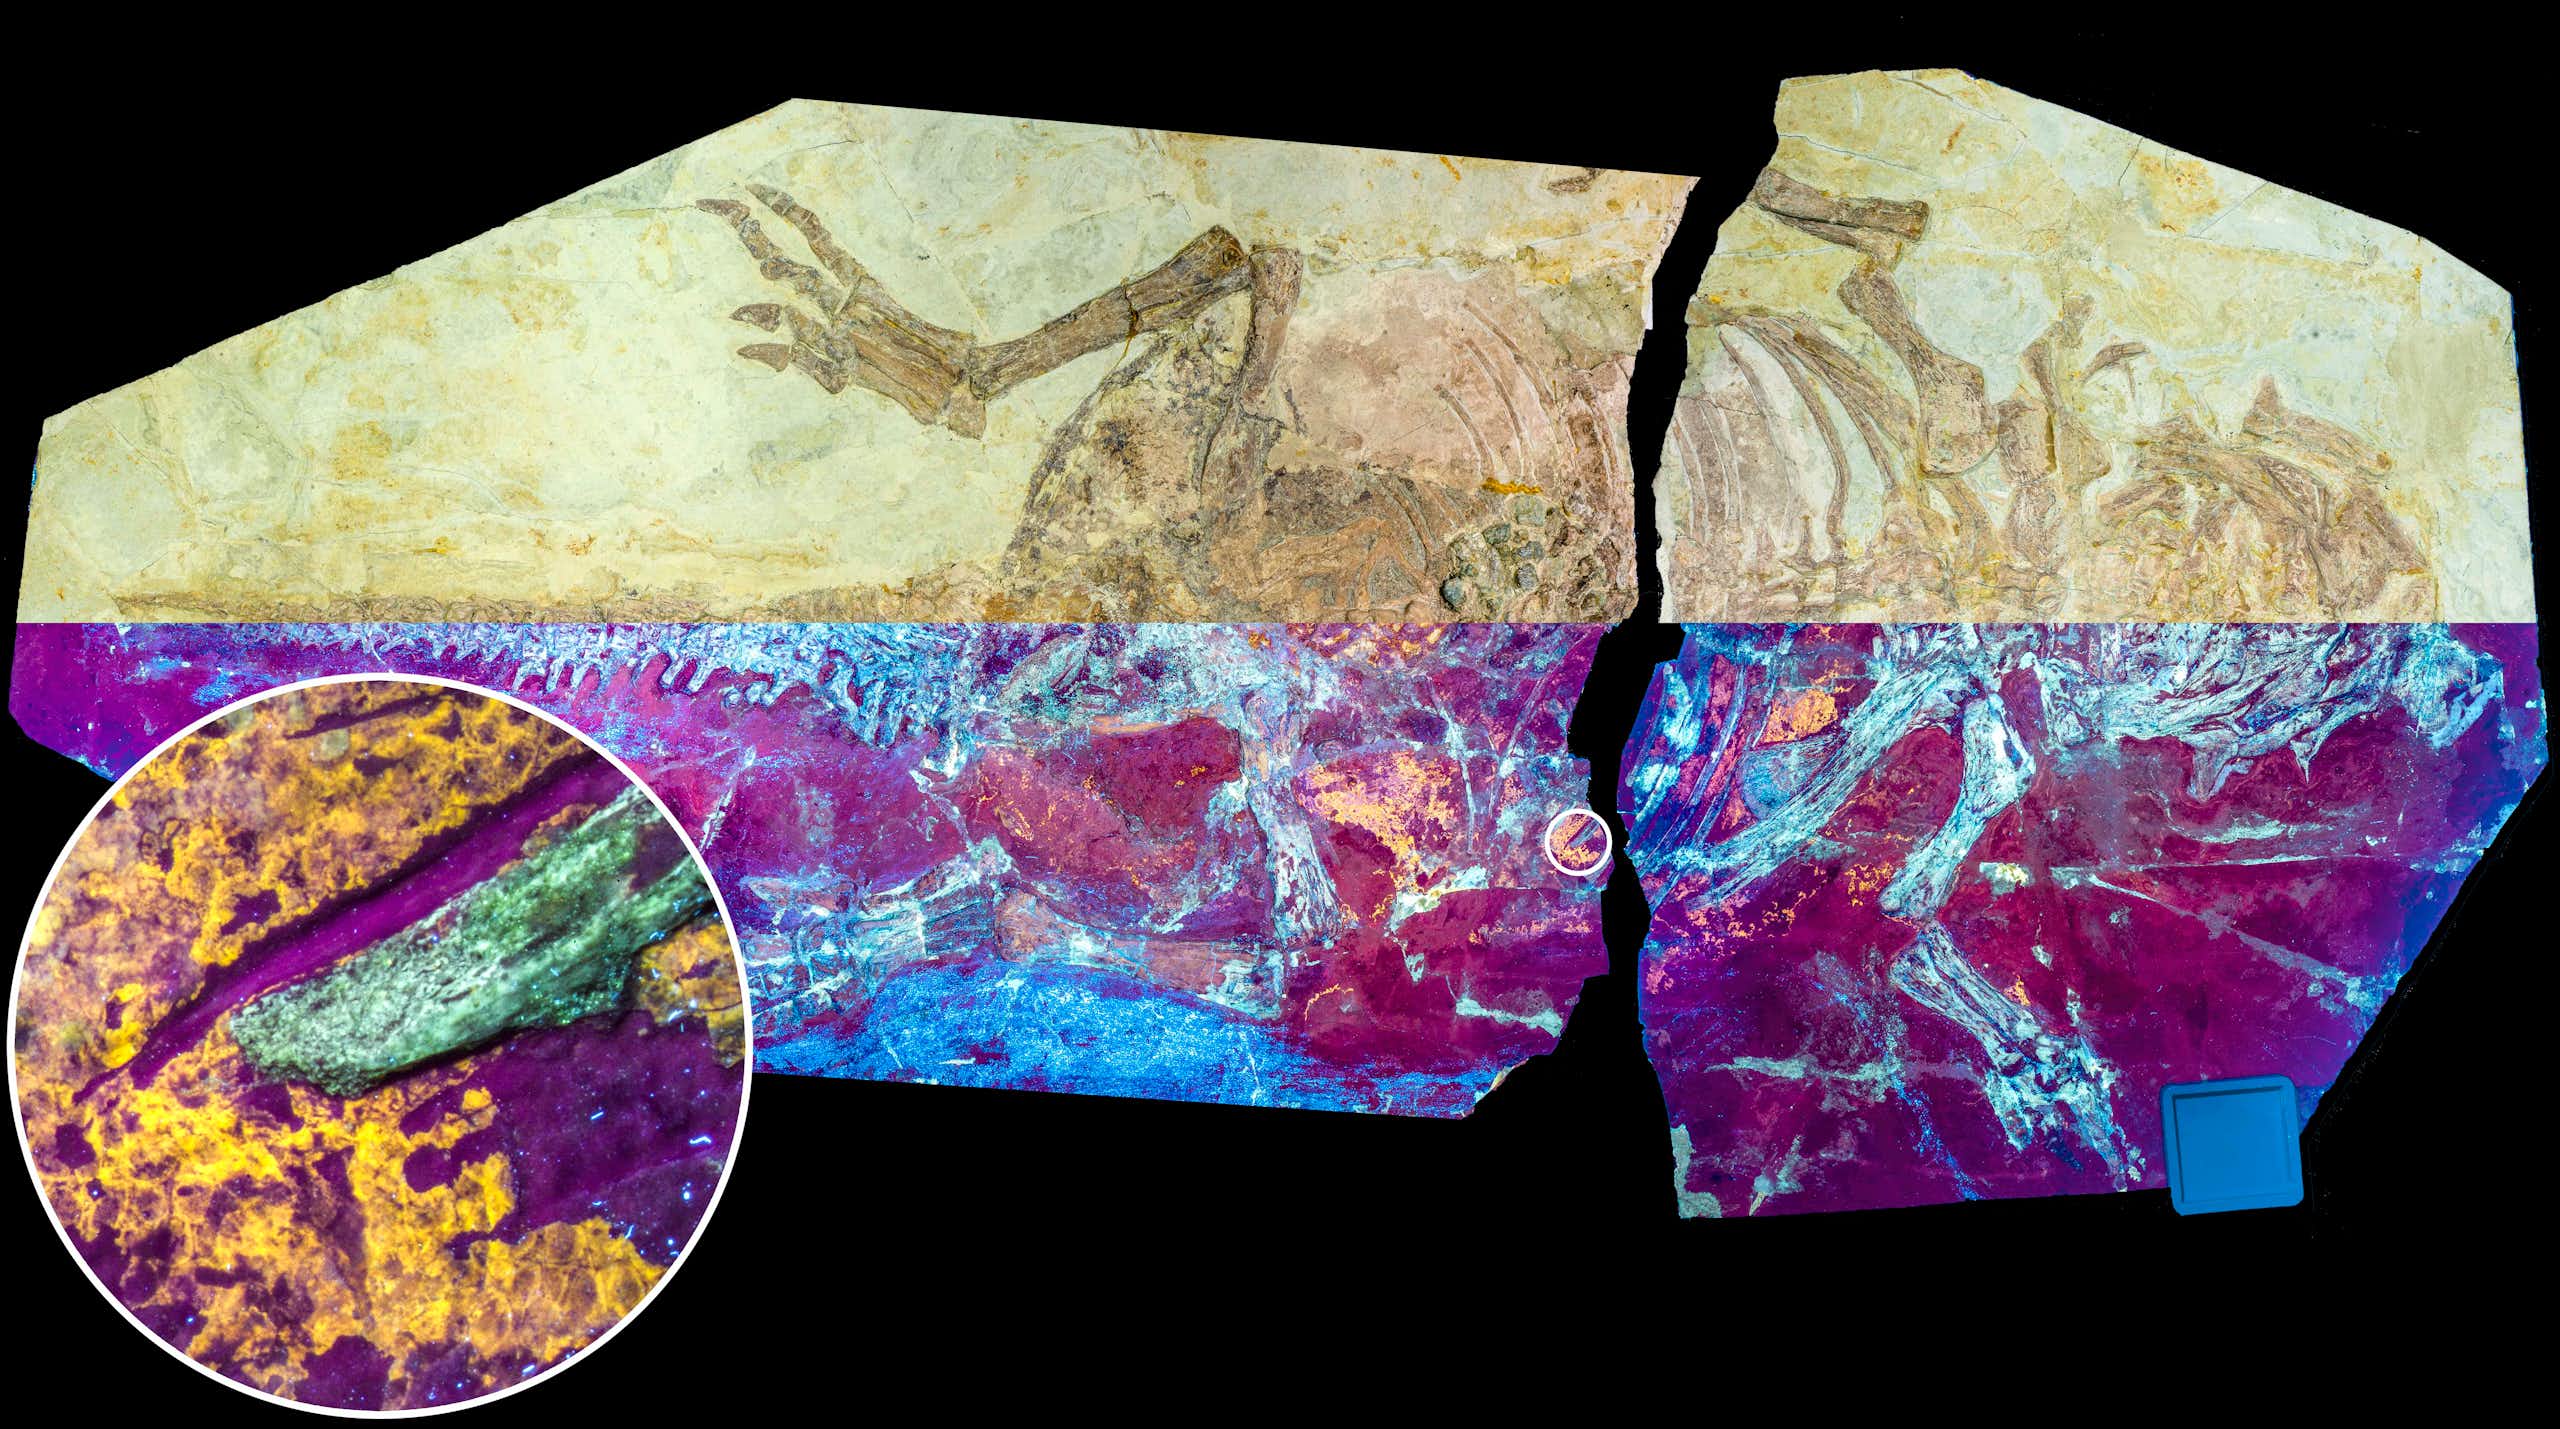 Image of fossil reptile, half in purple lighting